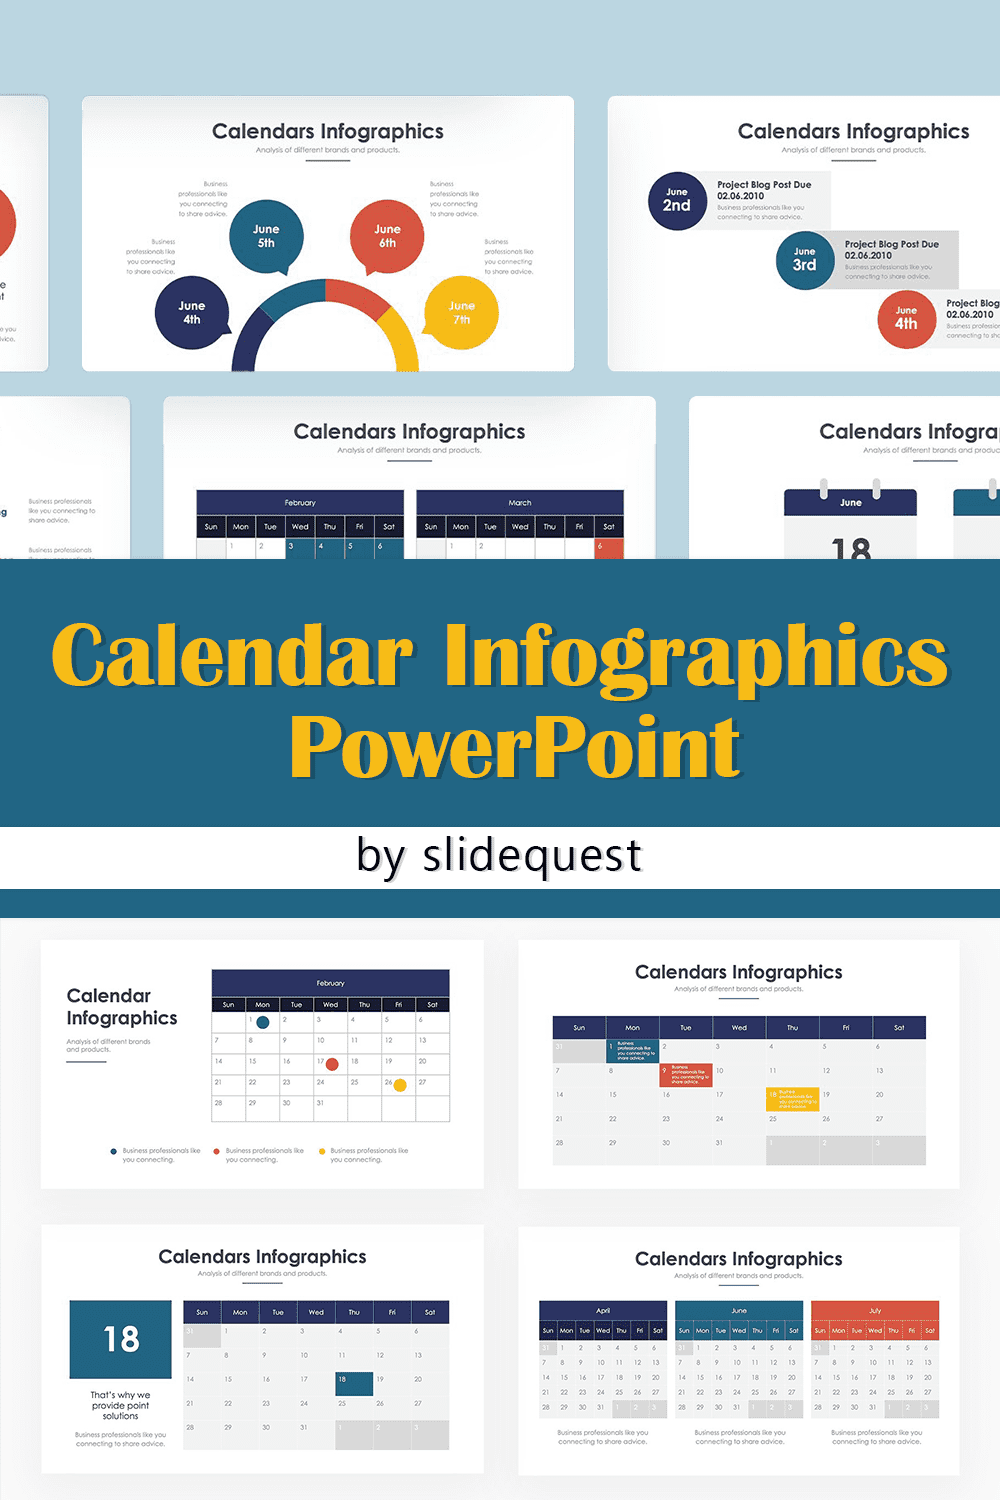 Calendar Infographics - PowerPoint pinterest image.